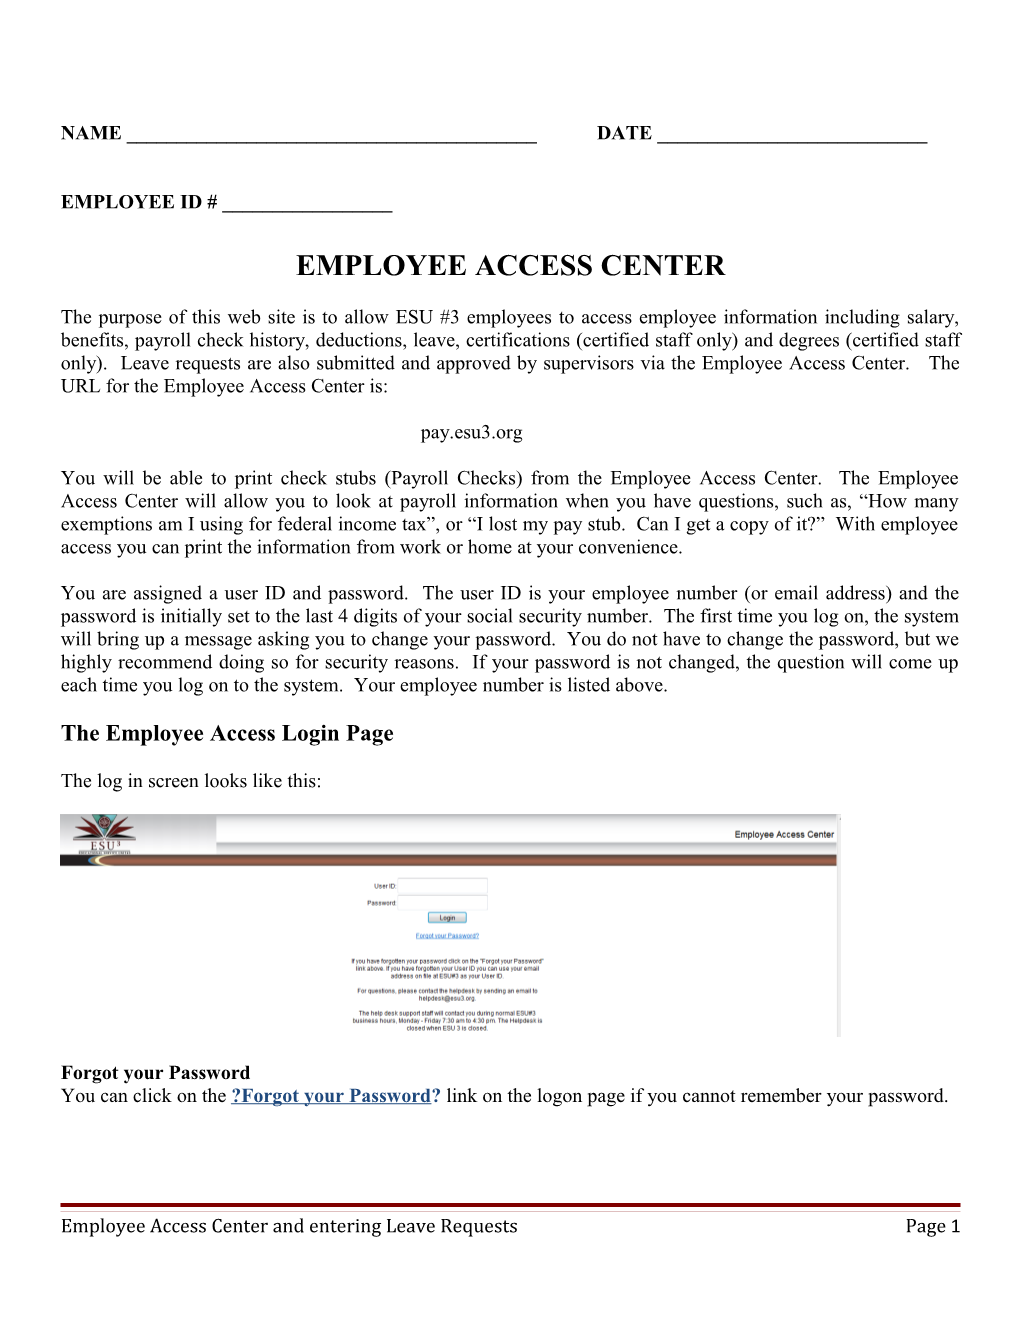 Employee Access Center